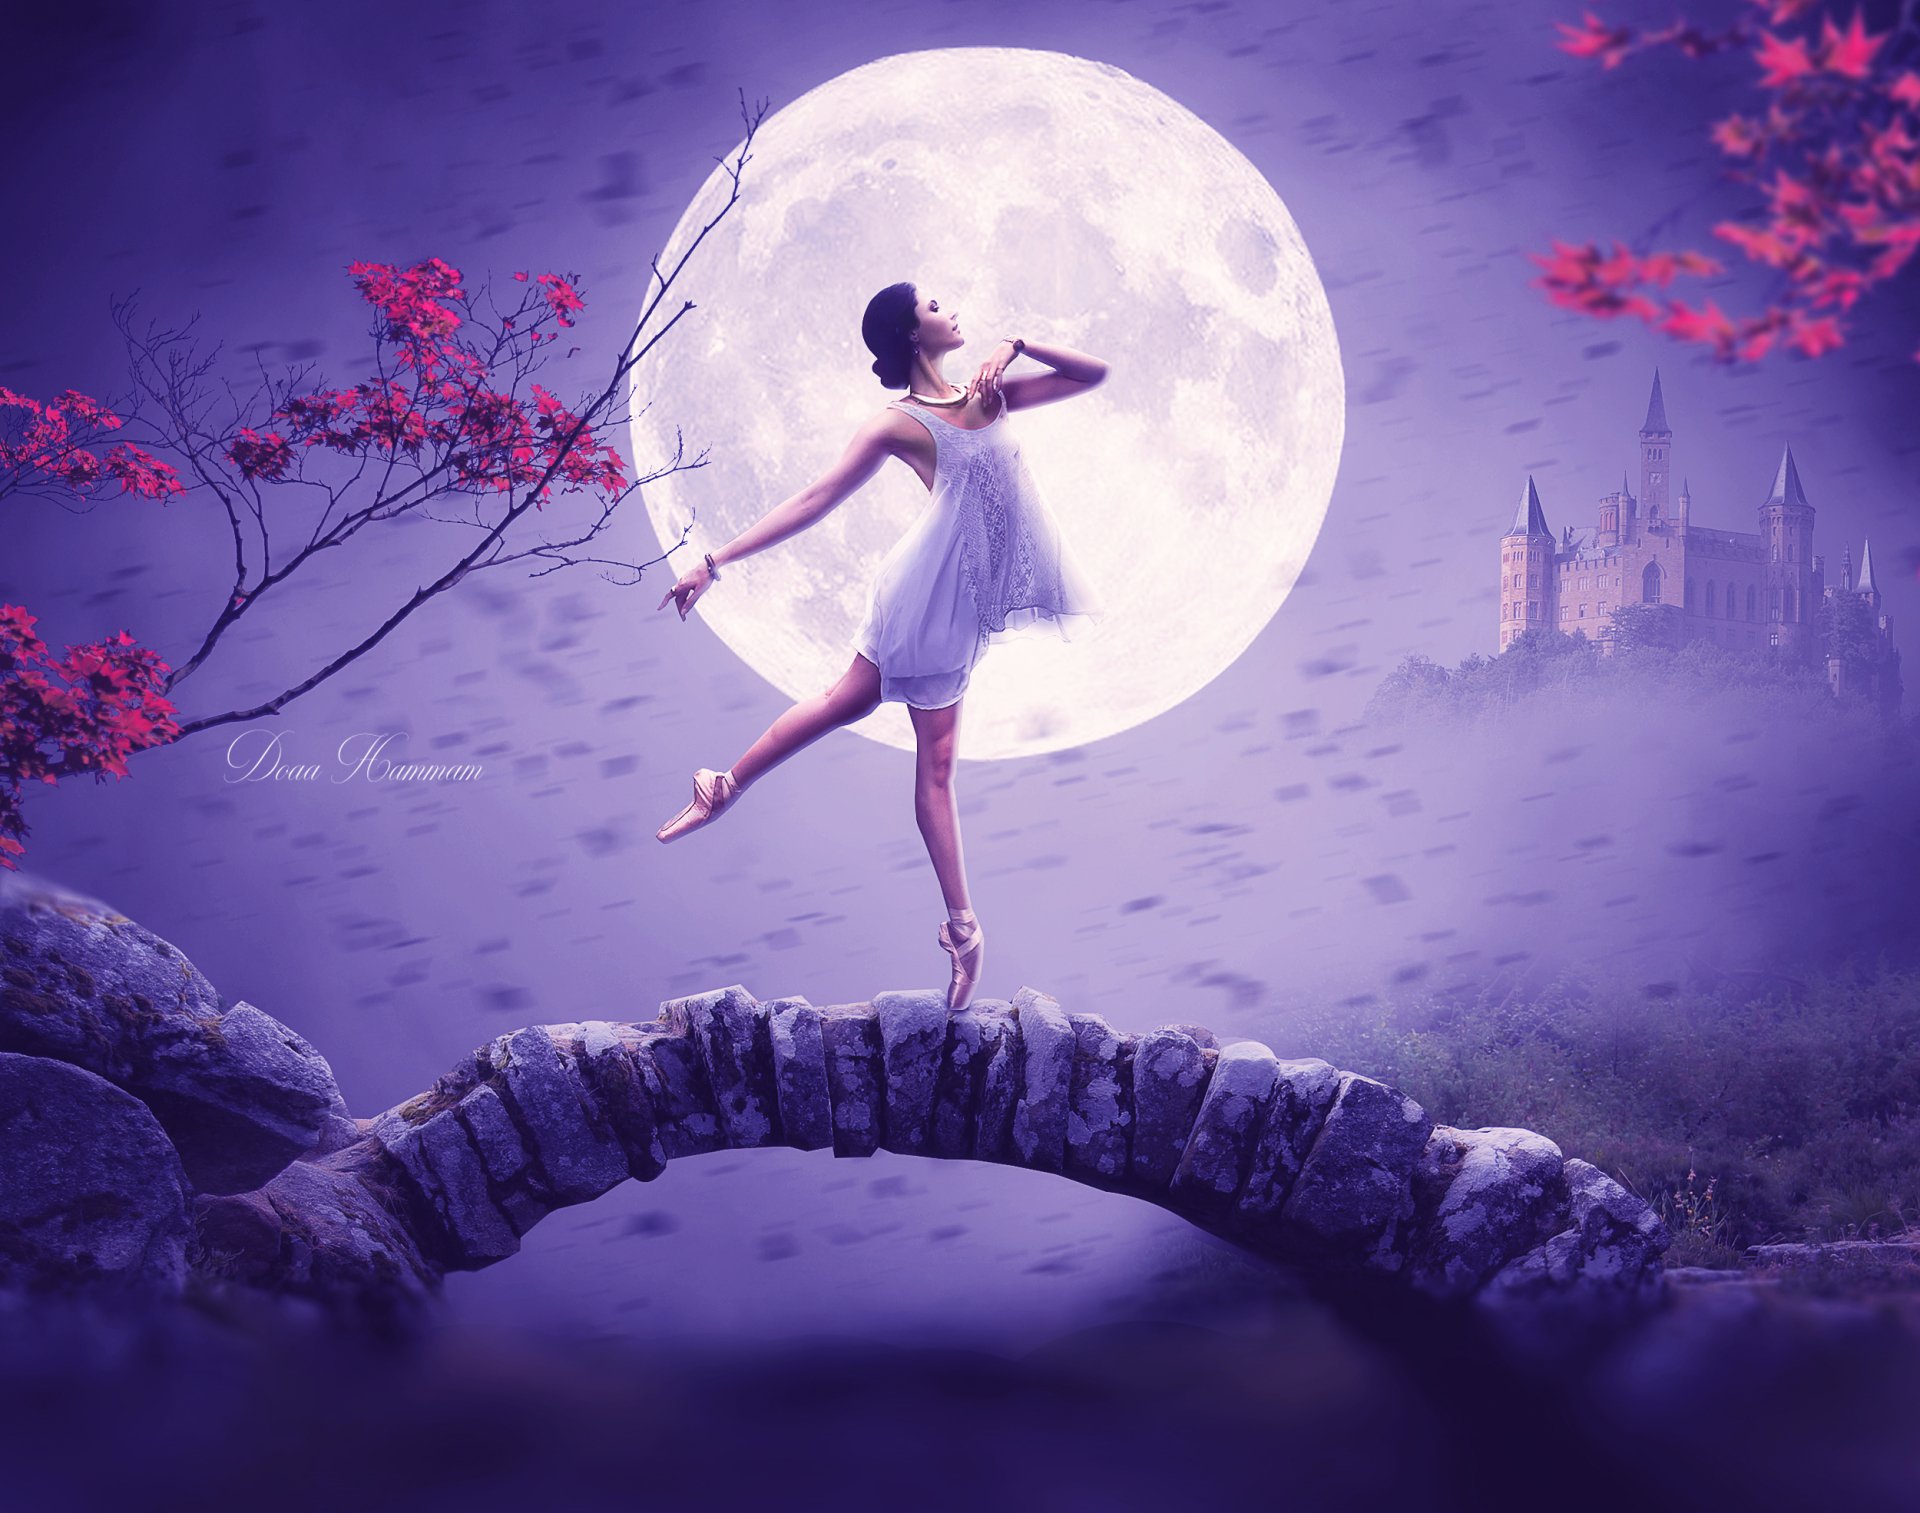 Download Moon Castle Full Moon Ballerina Woman Artistic  HD Wallpaper by Doaa Hammam